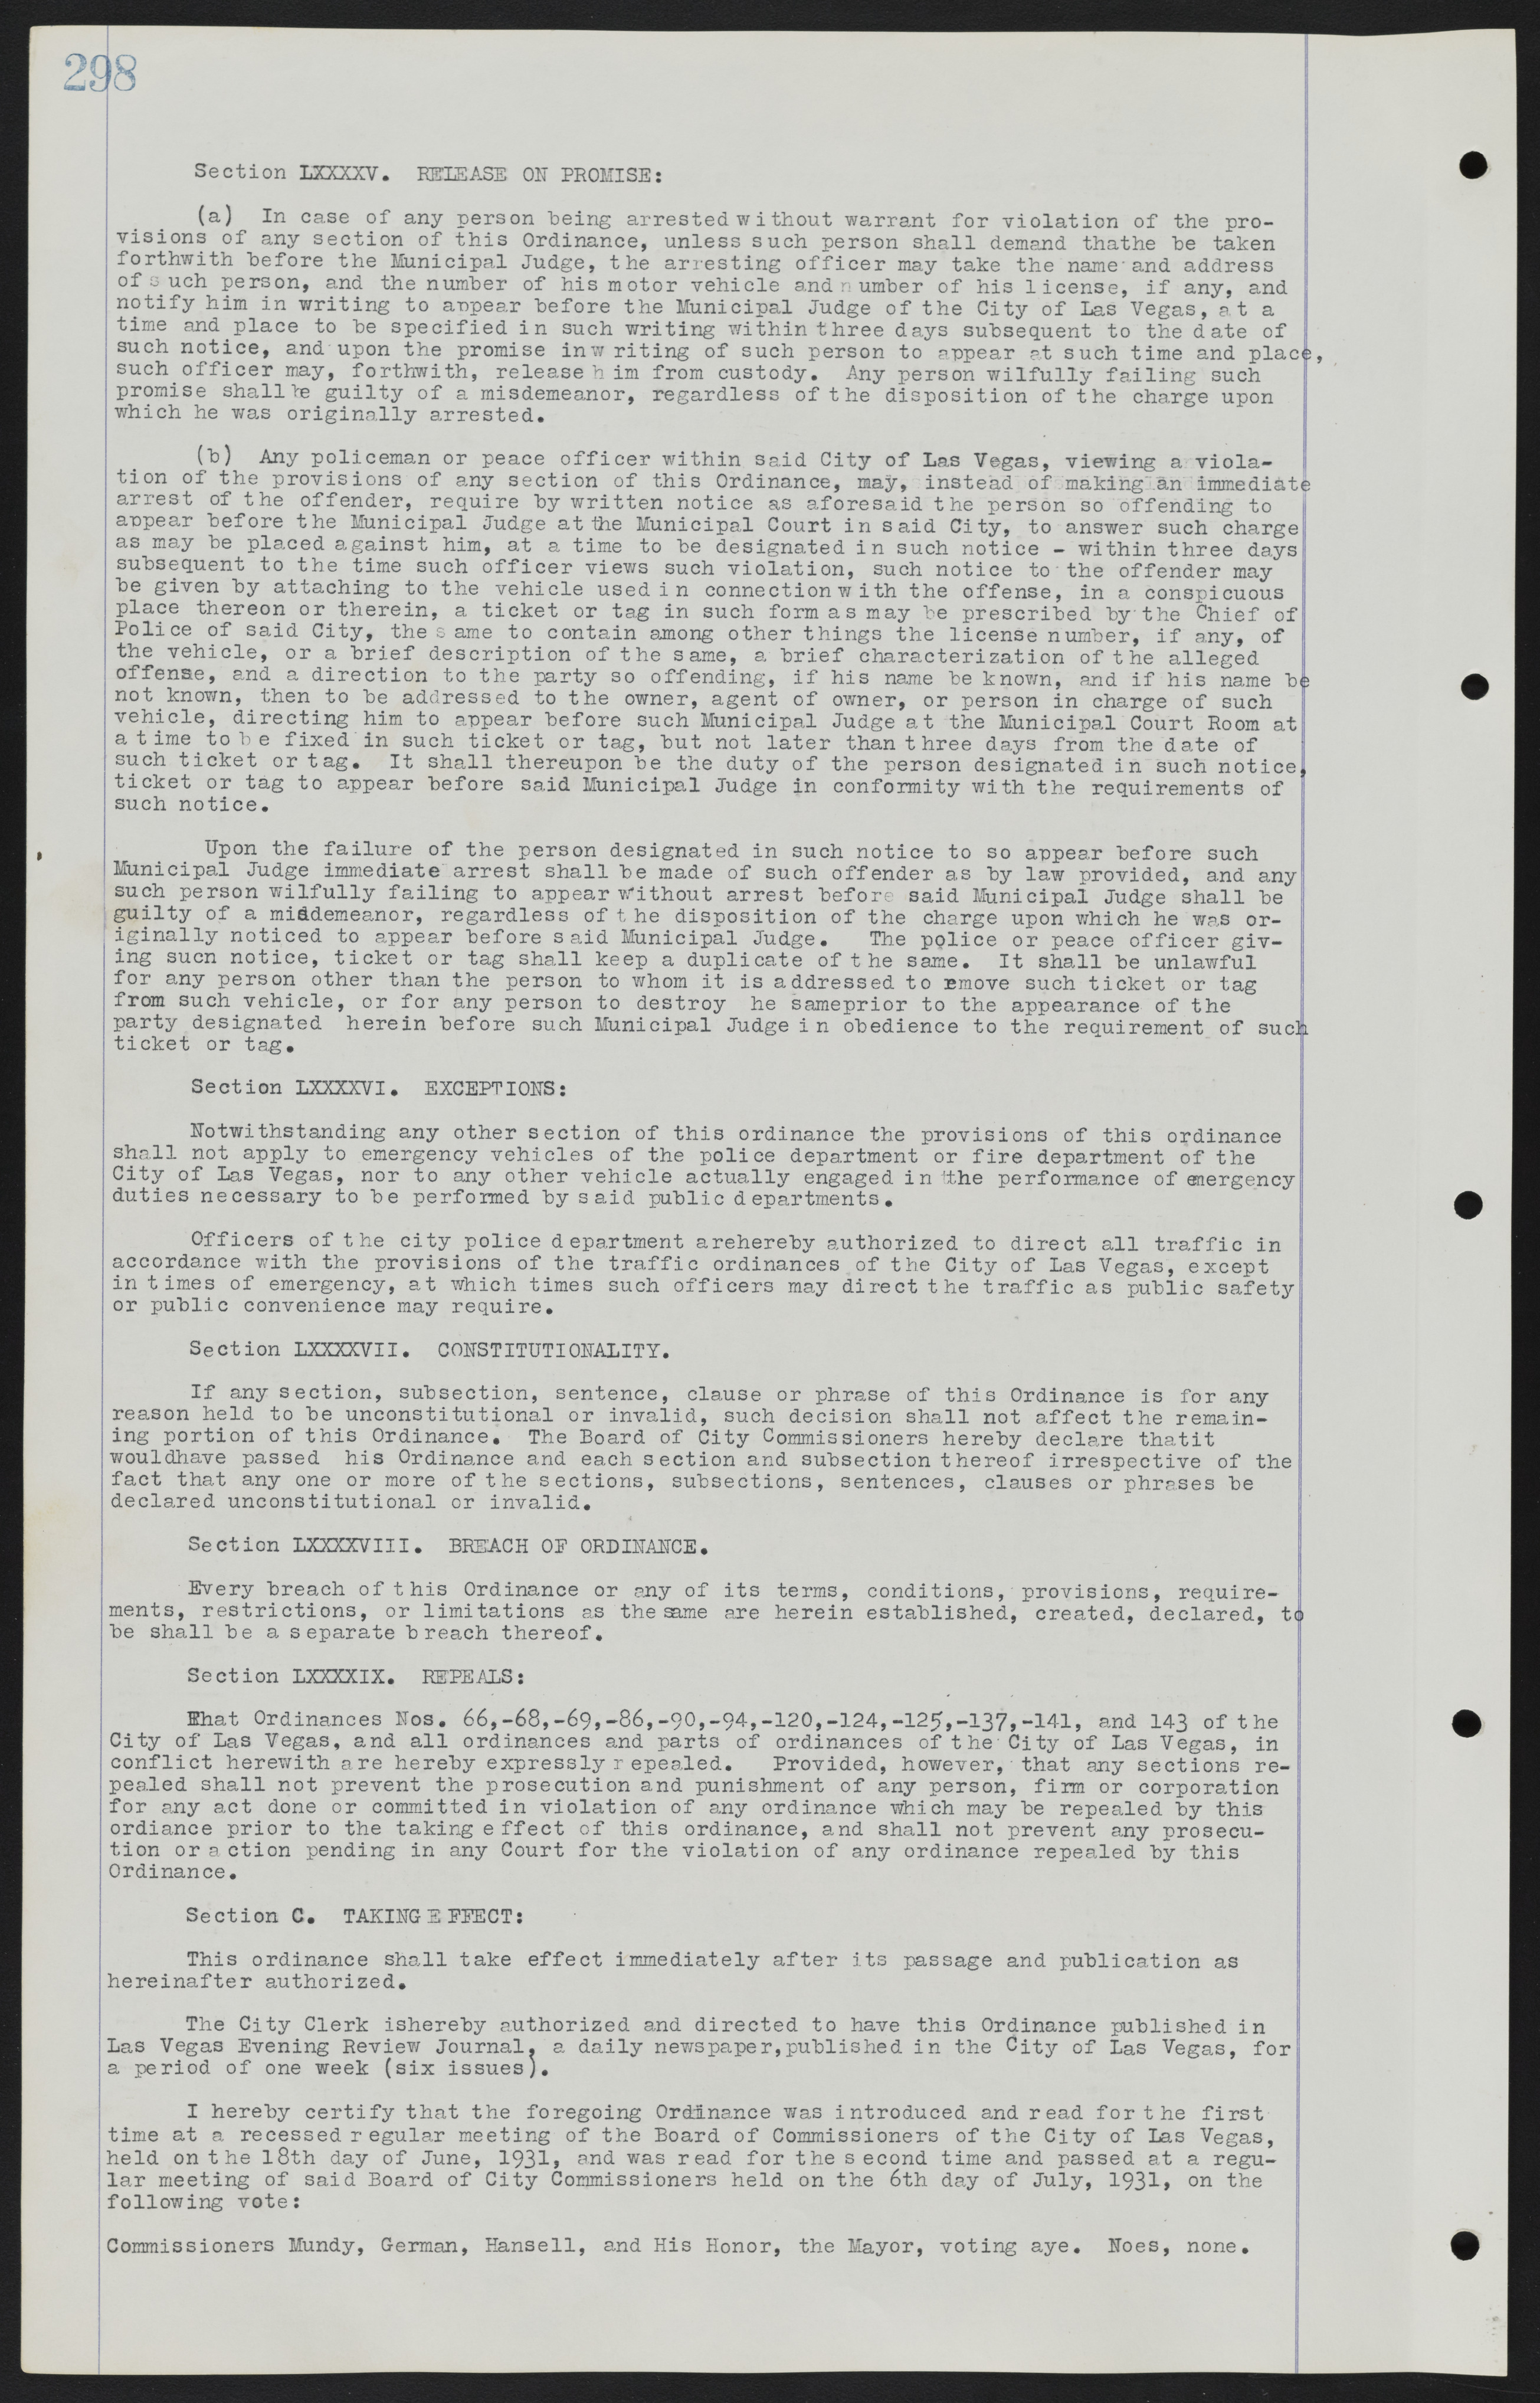 Las Vegas City Ordinances, July 18, 1911 to March 31, 1933, lvc000013-302